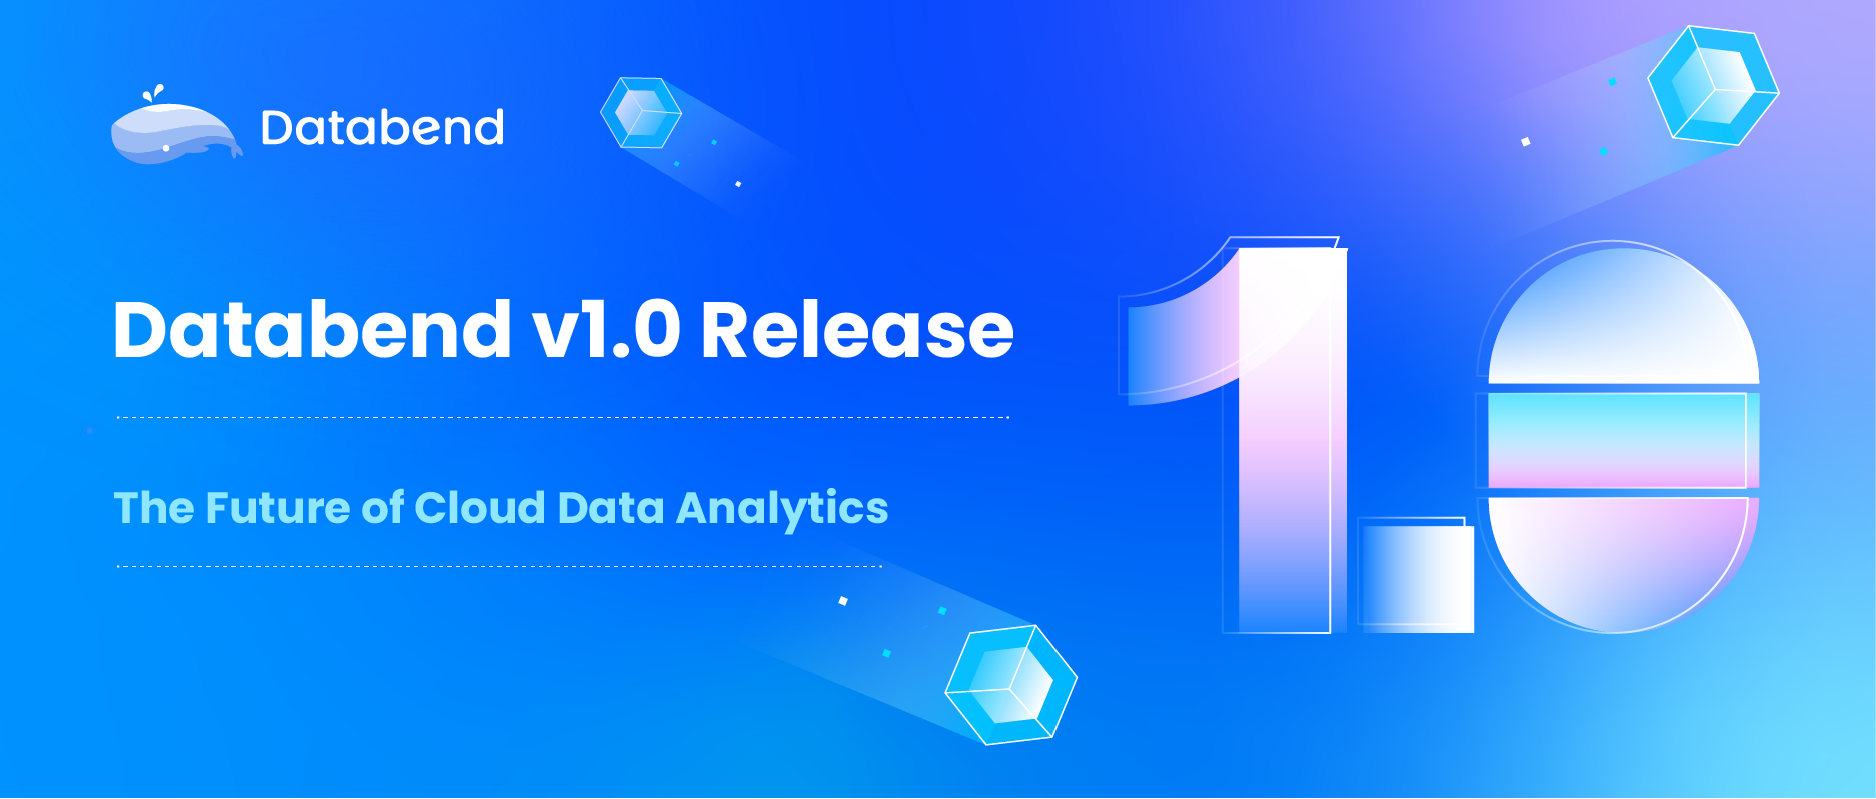 Databend v1.0 Release 正式发布